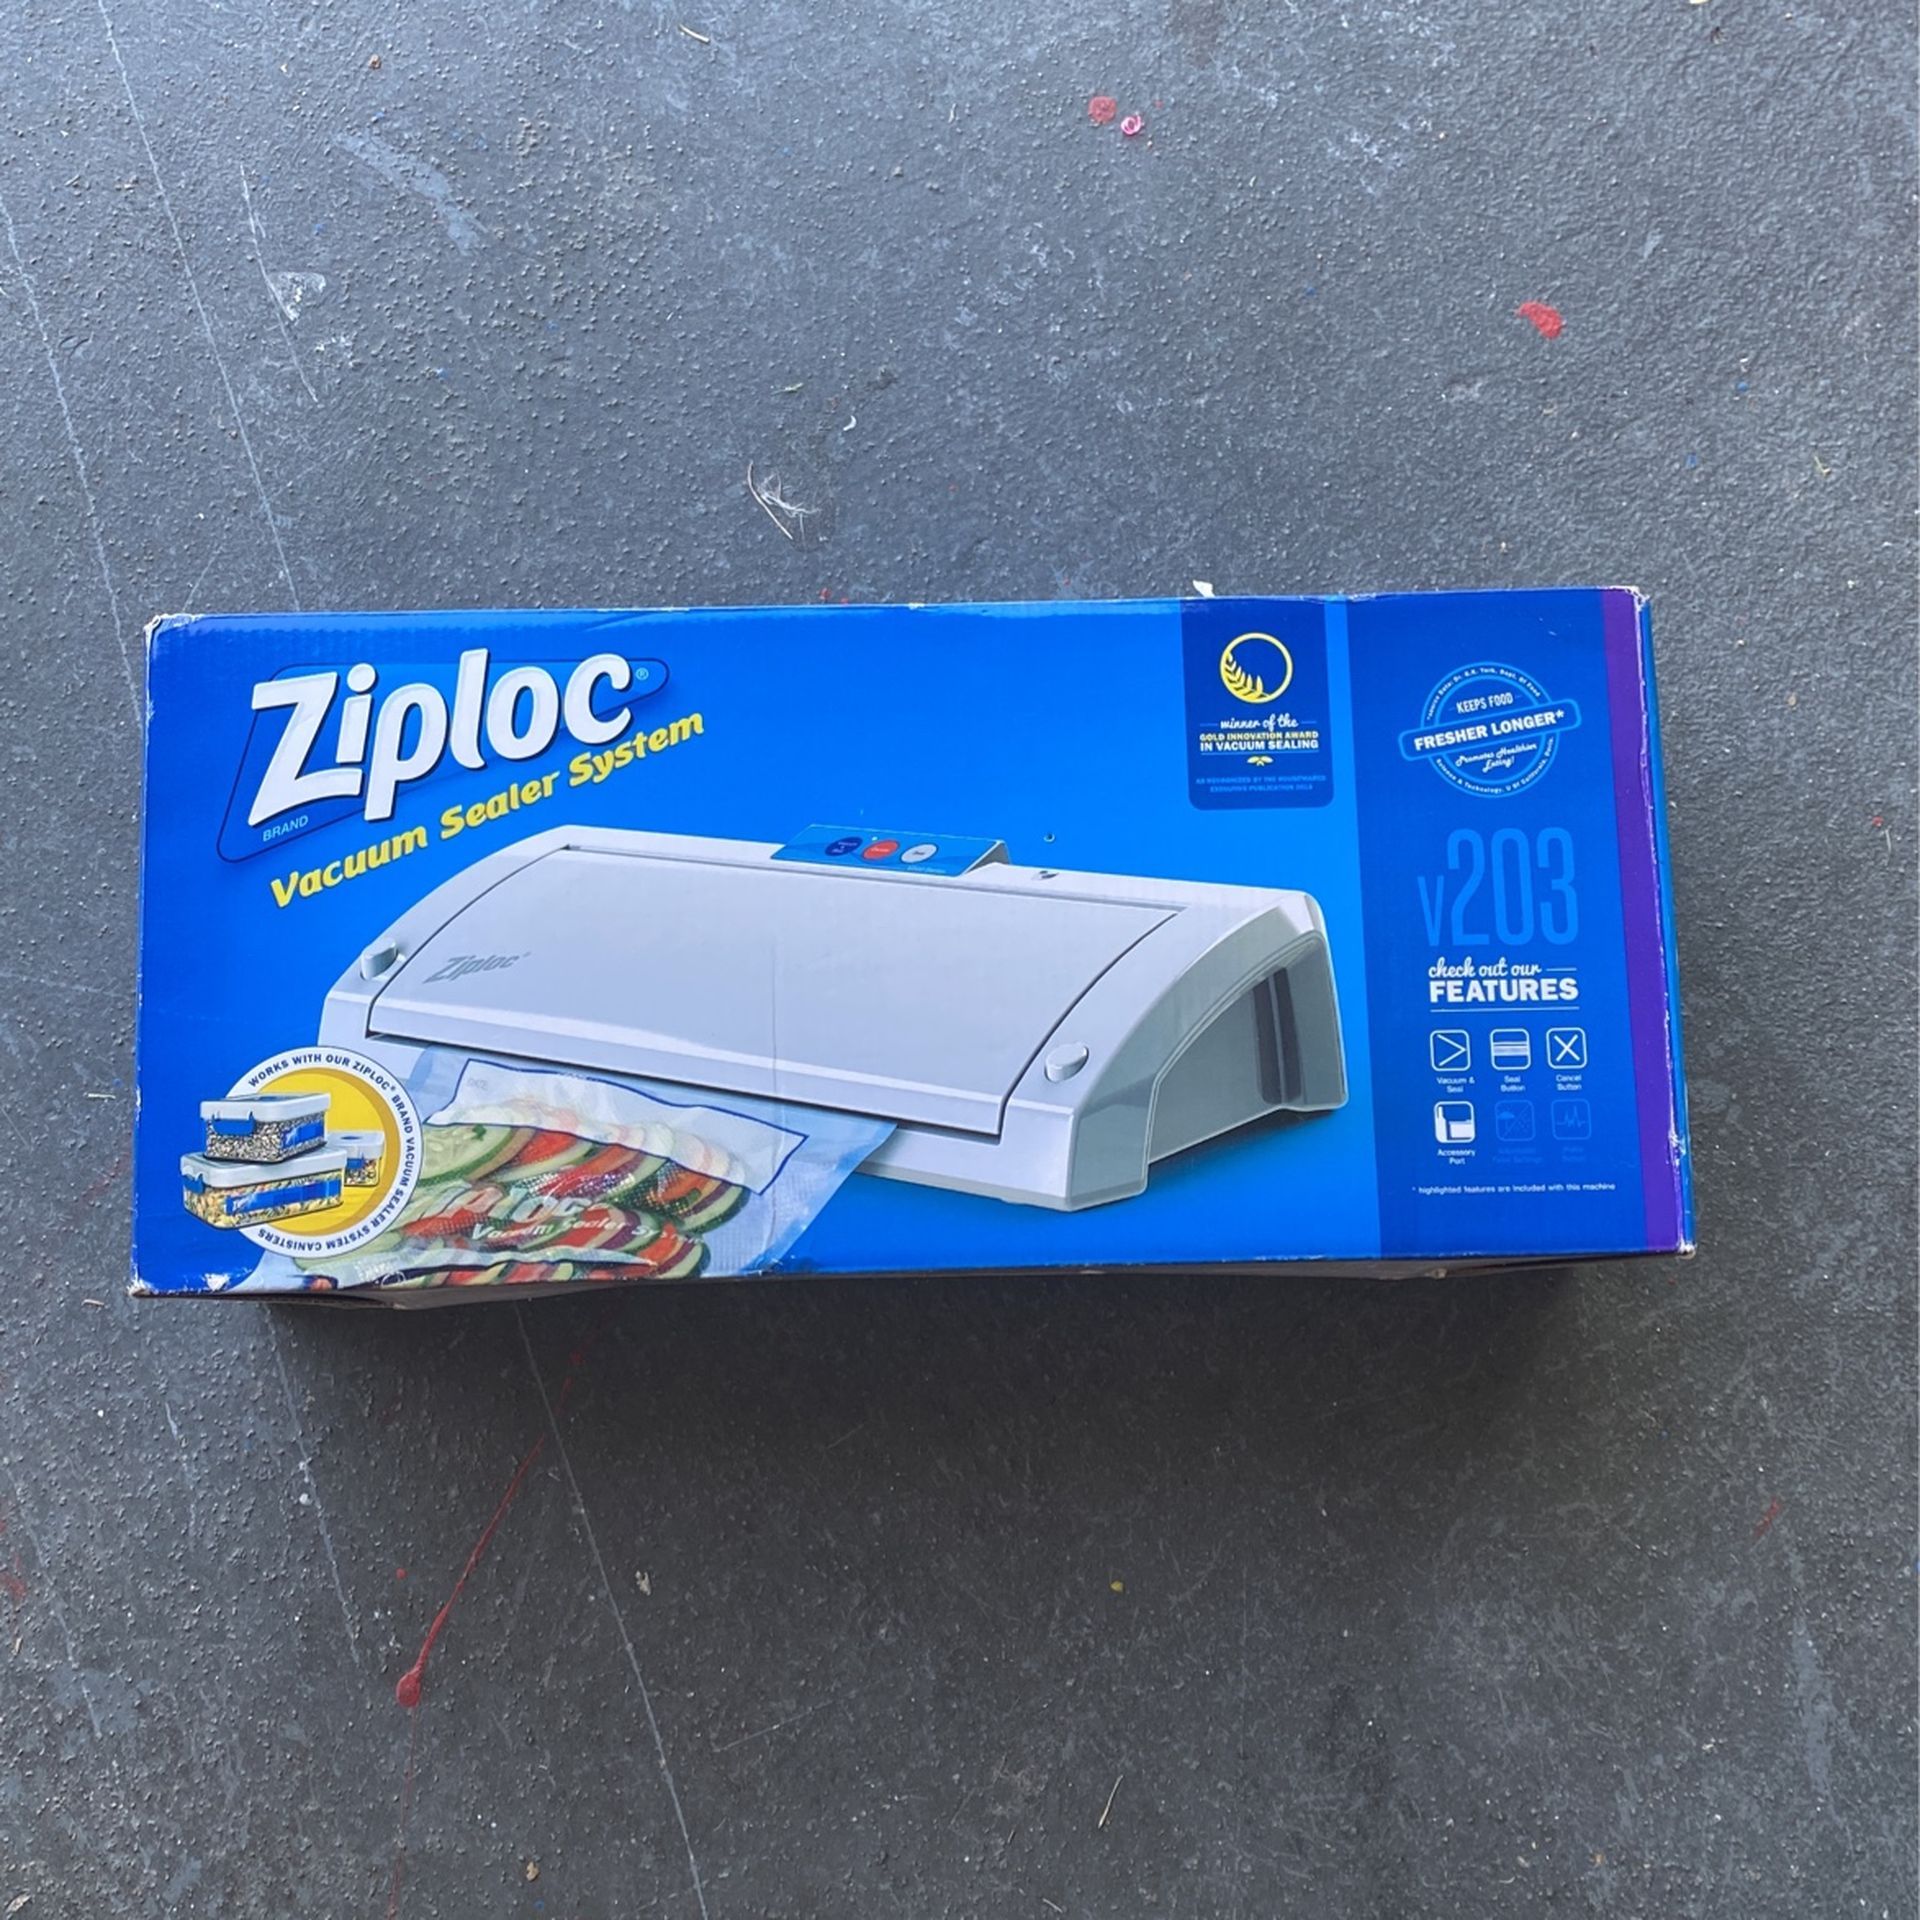 Ziploc, Kitchen, Ziploc Vacuum Sealer System